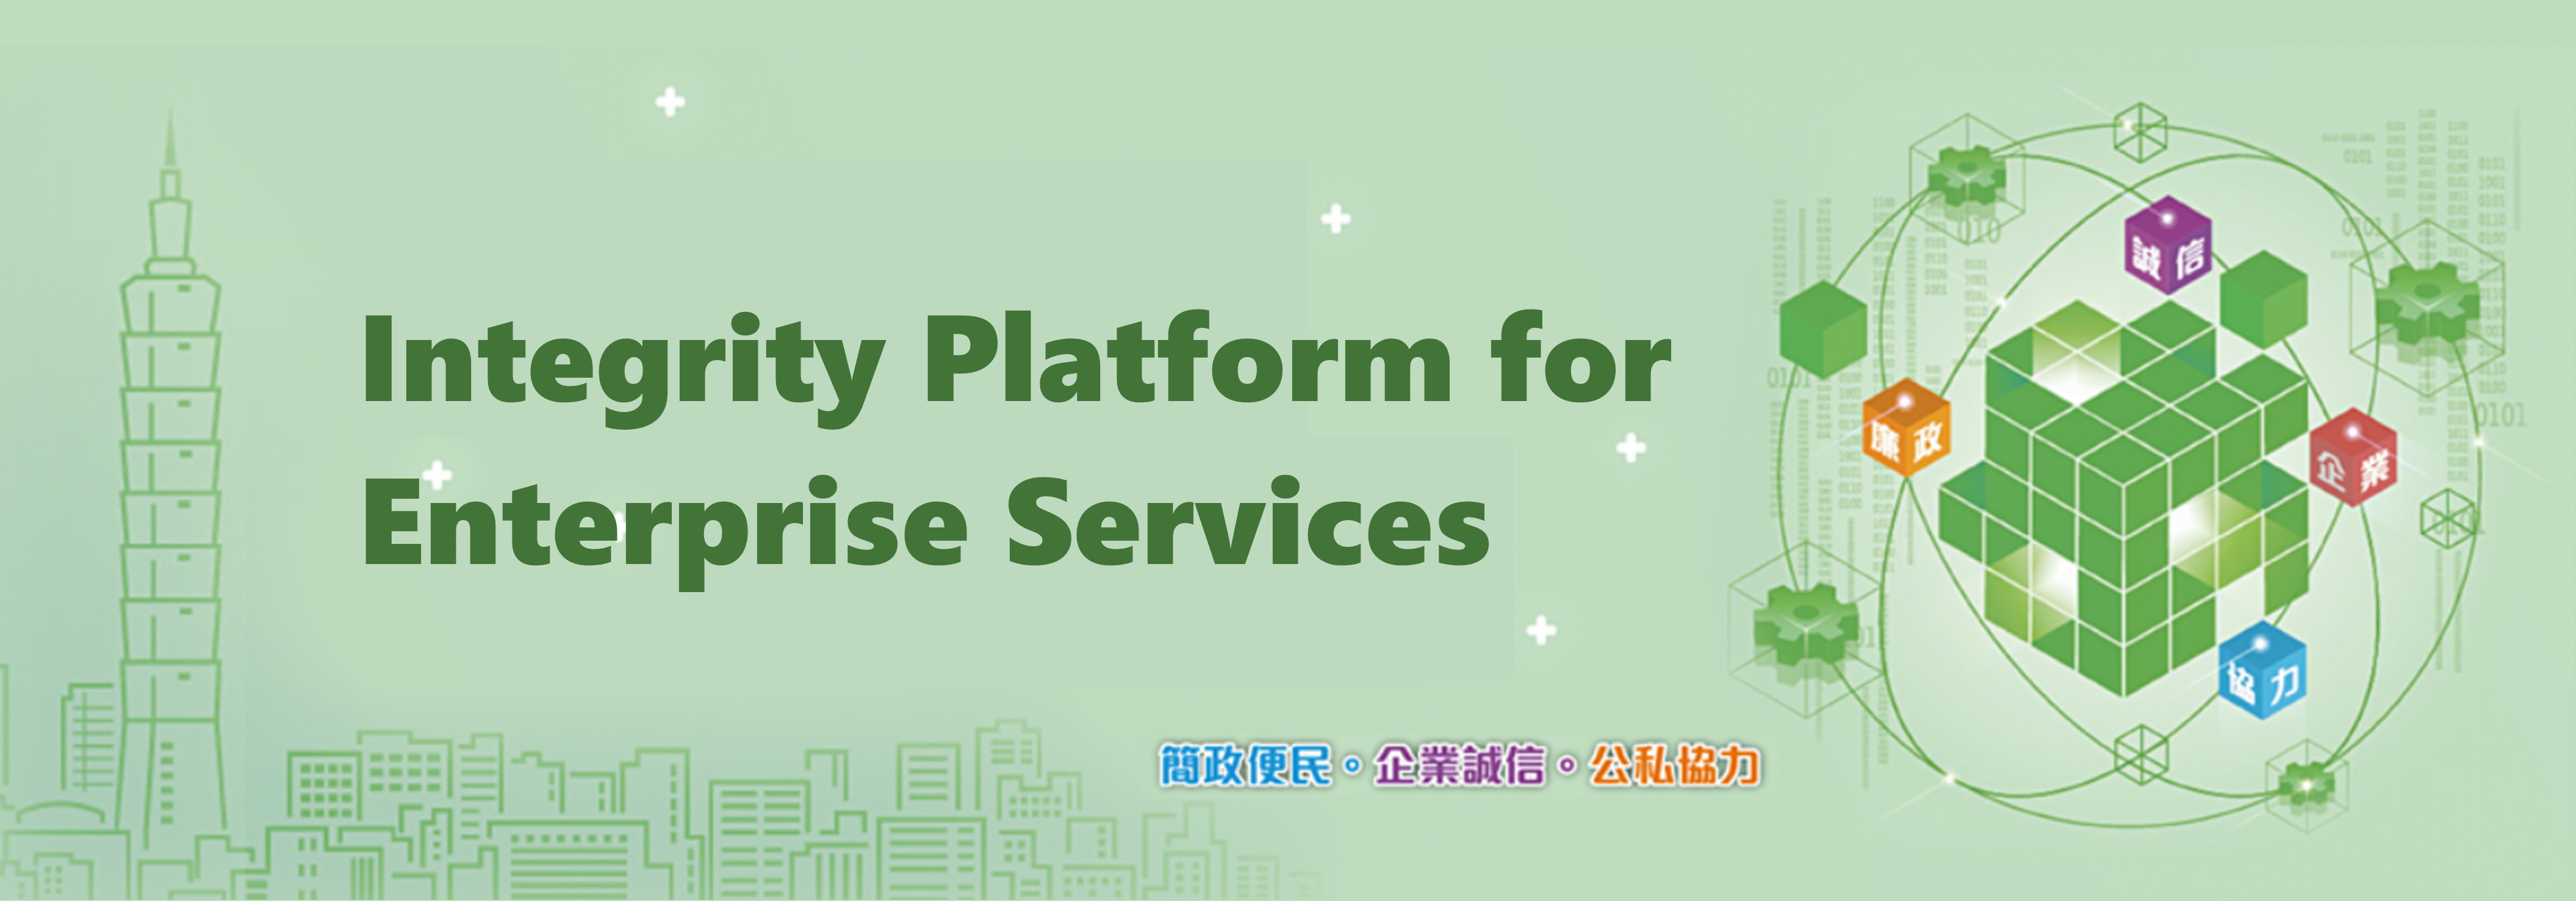 Integrity Platform for Enterprise Services